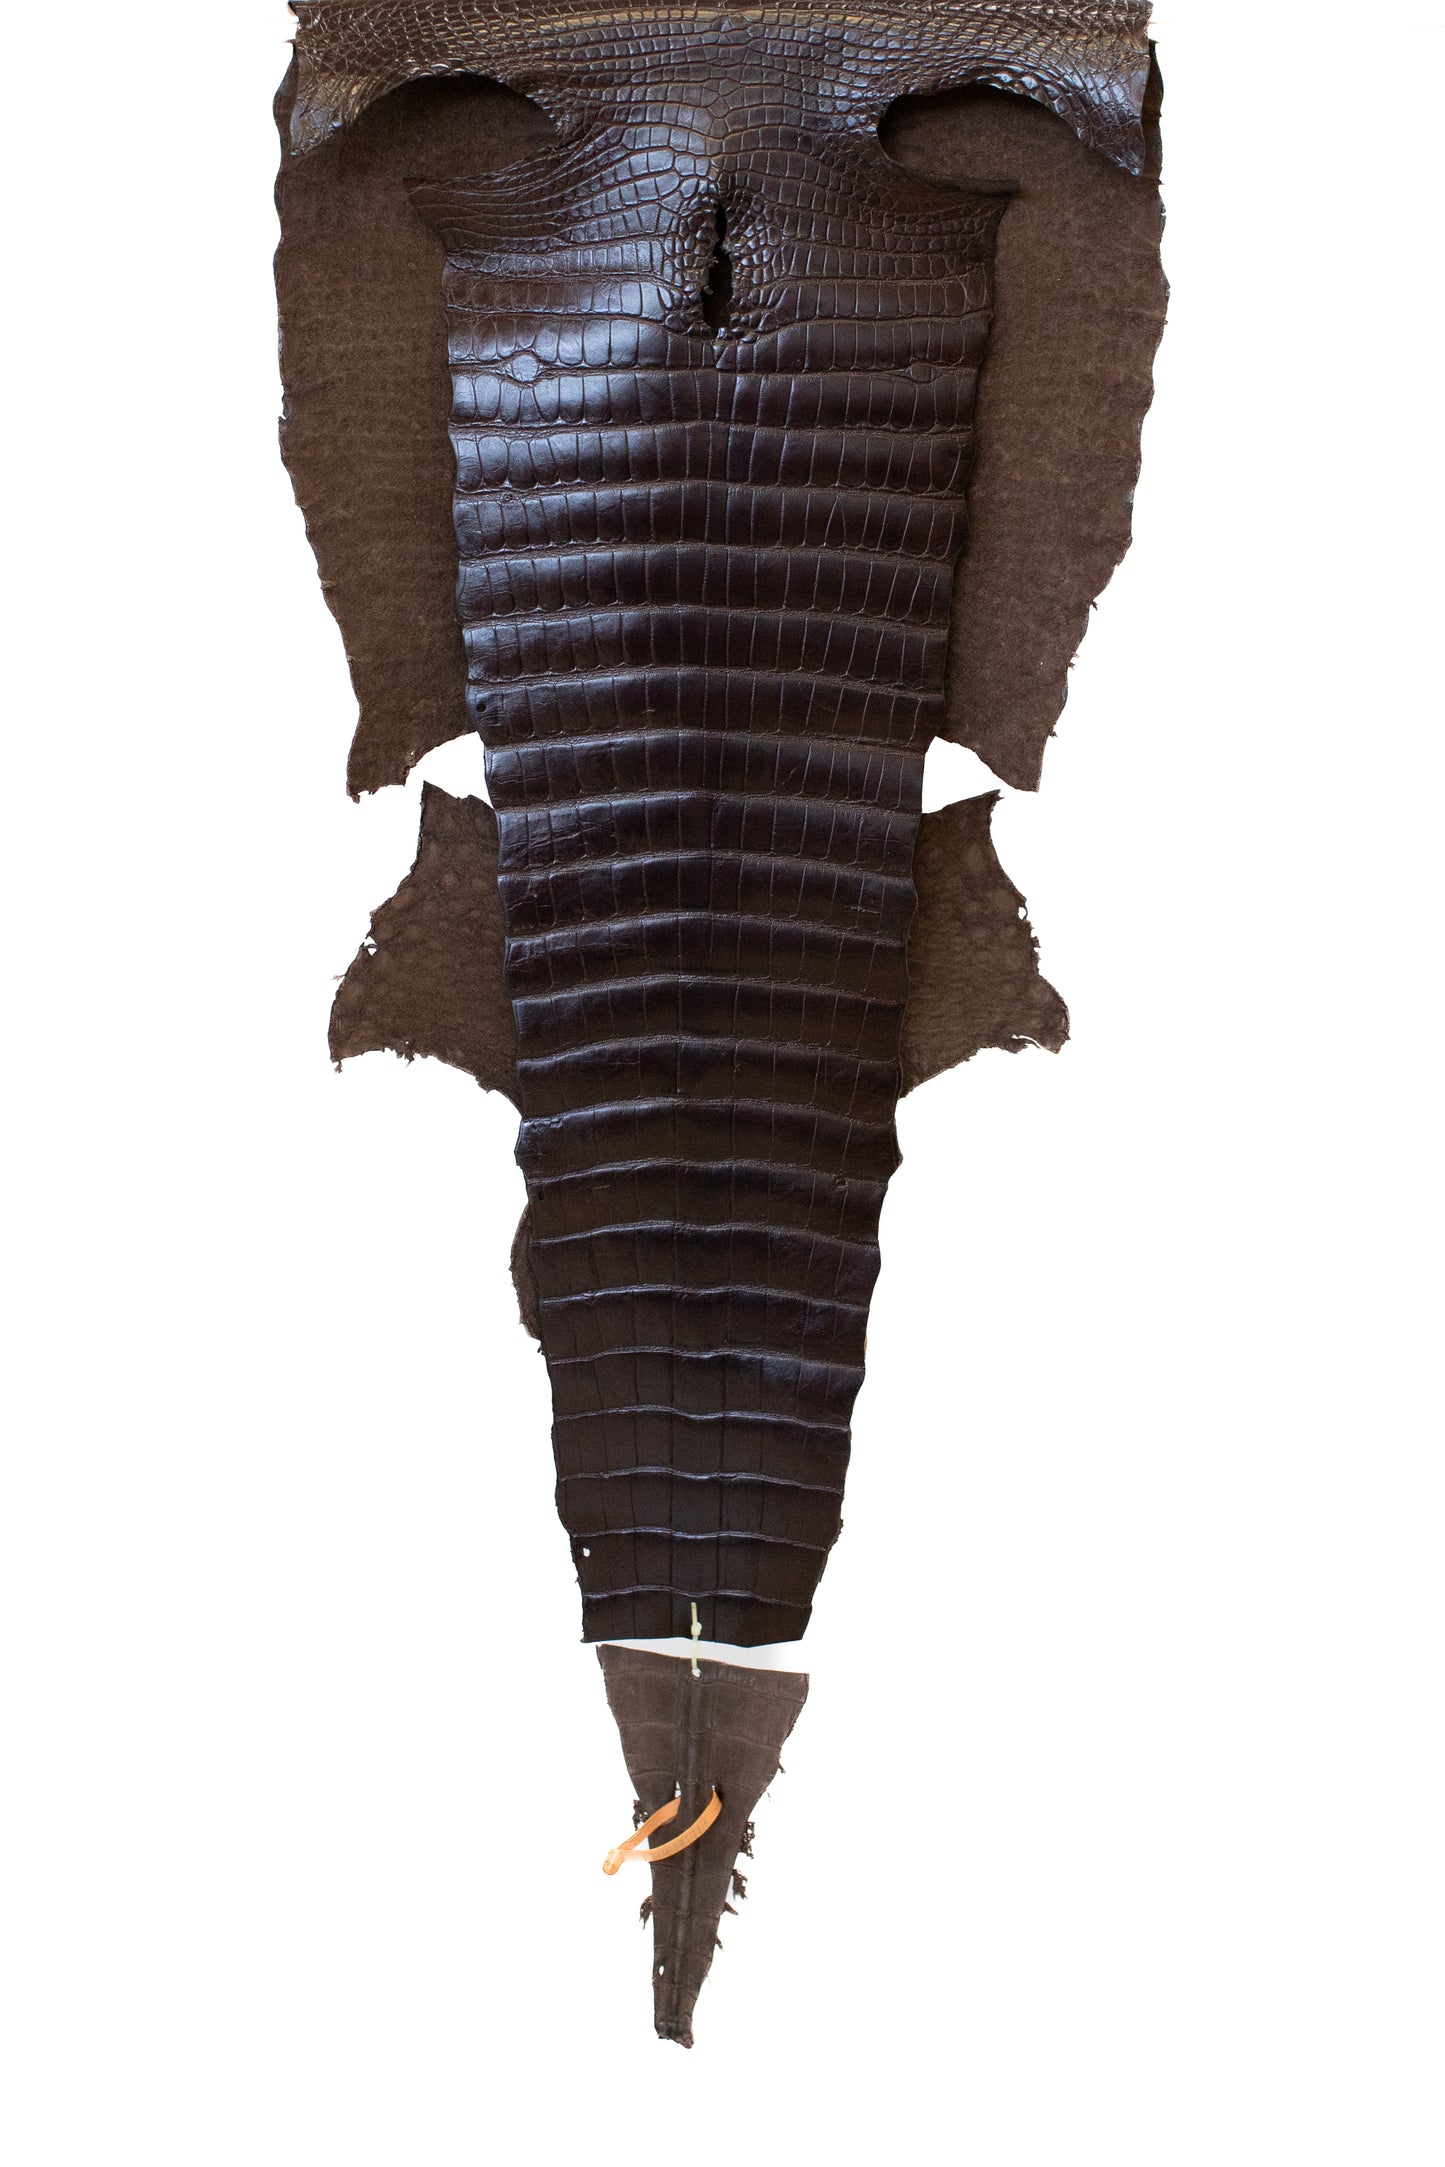 52 cm Grade 2/3 RL Chocolate Millennium Wild American Alligator Leather - Tag: LA18-0053839